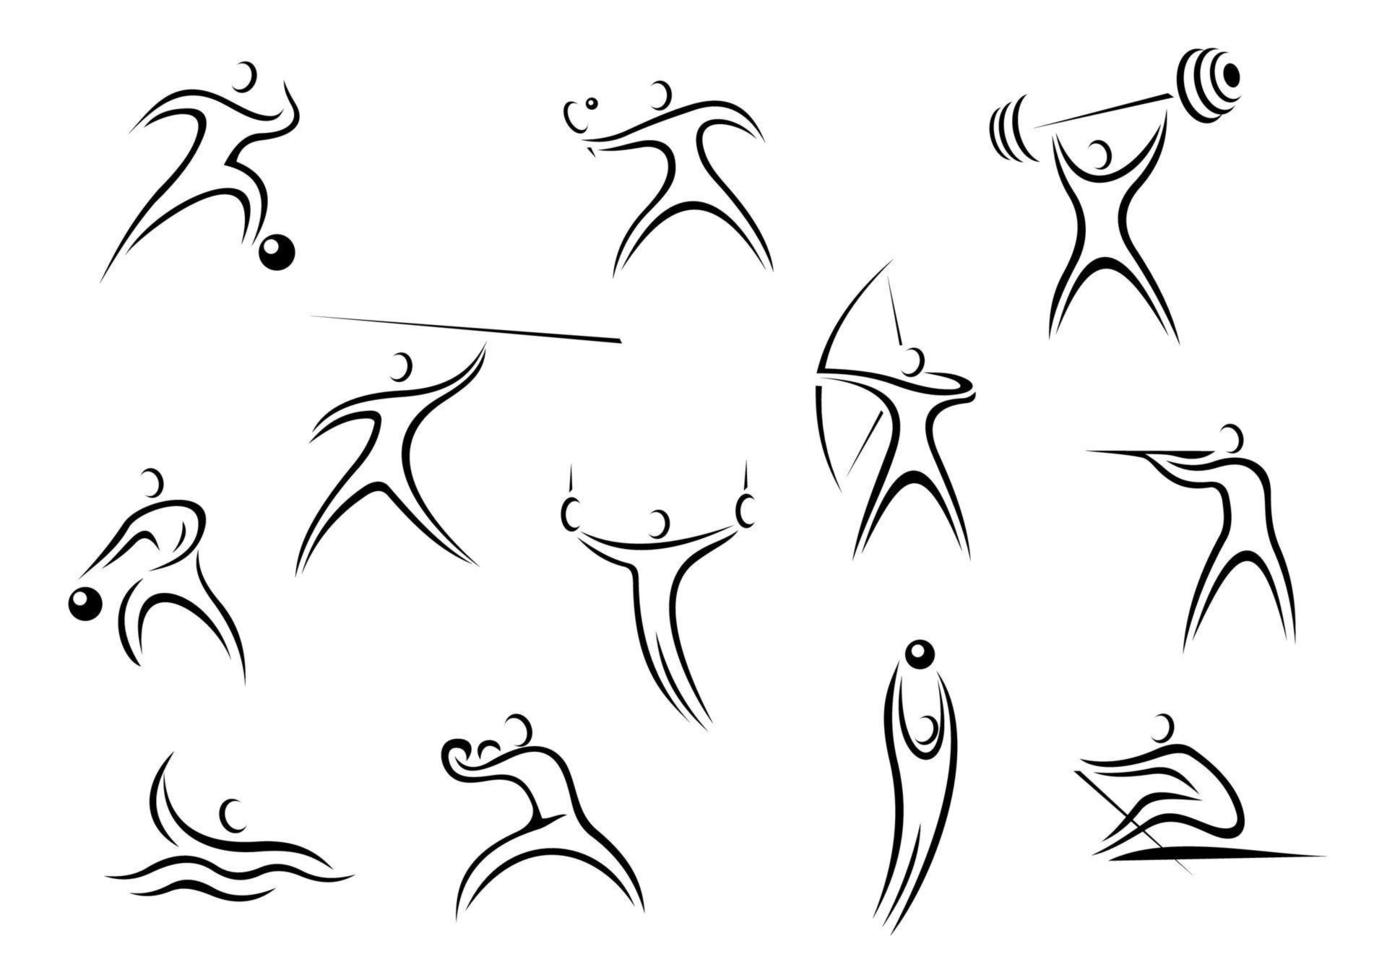 Different sportsman sketches vector